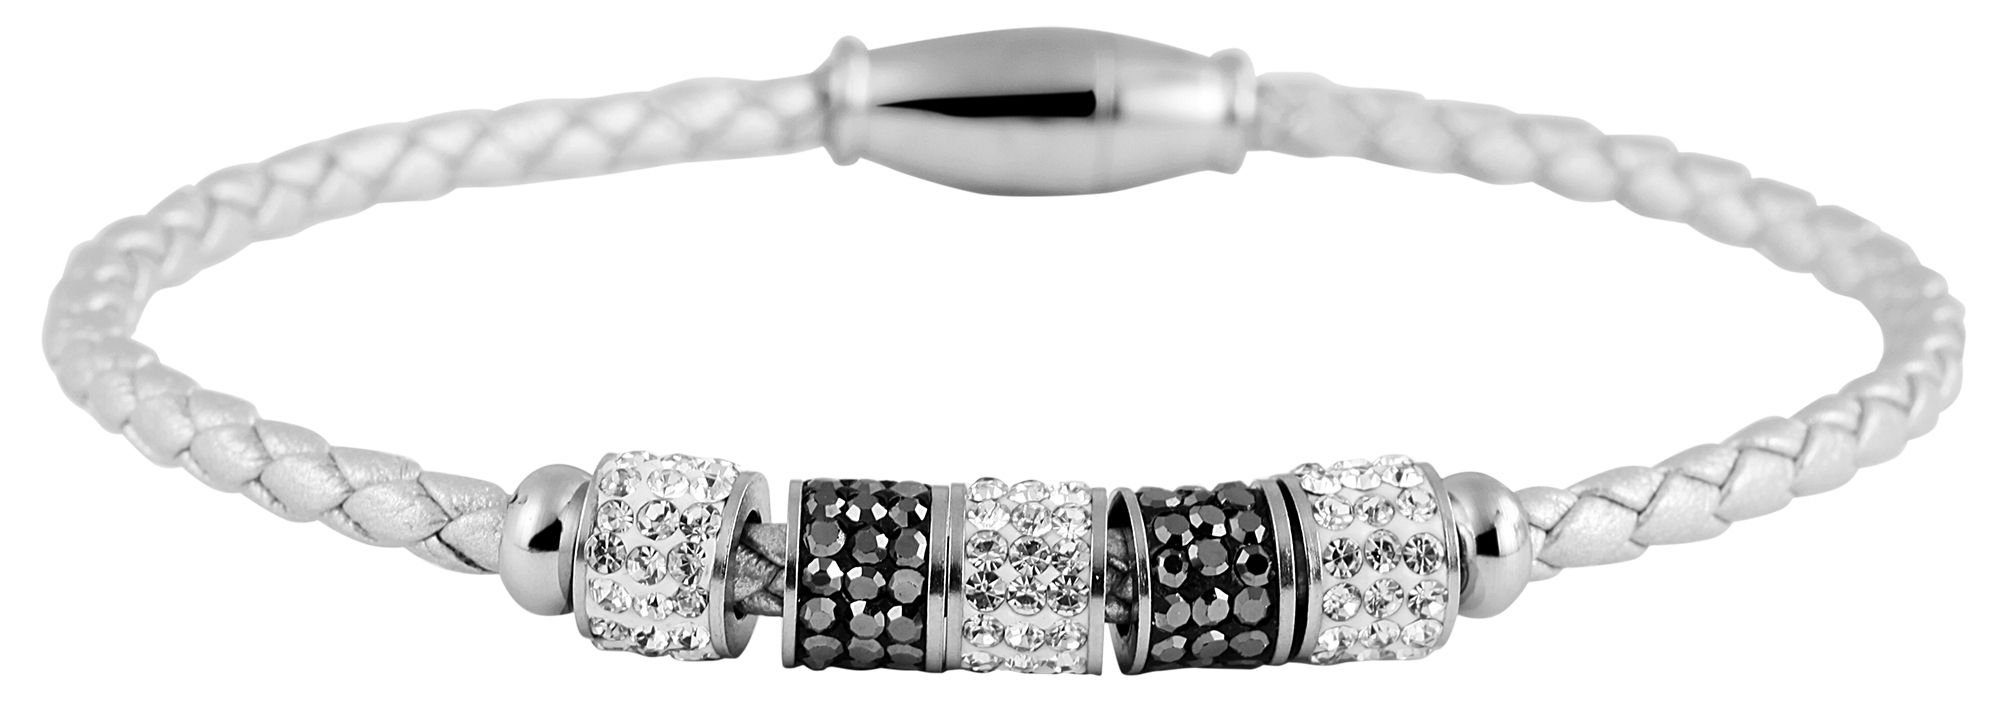 AKZENT Lederarmband Bethany Damen Armband aus Leder mit Edelstahlelement und Similibesatz (einzeln) silberfarbig